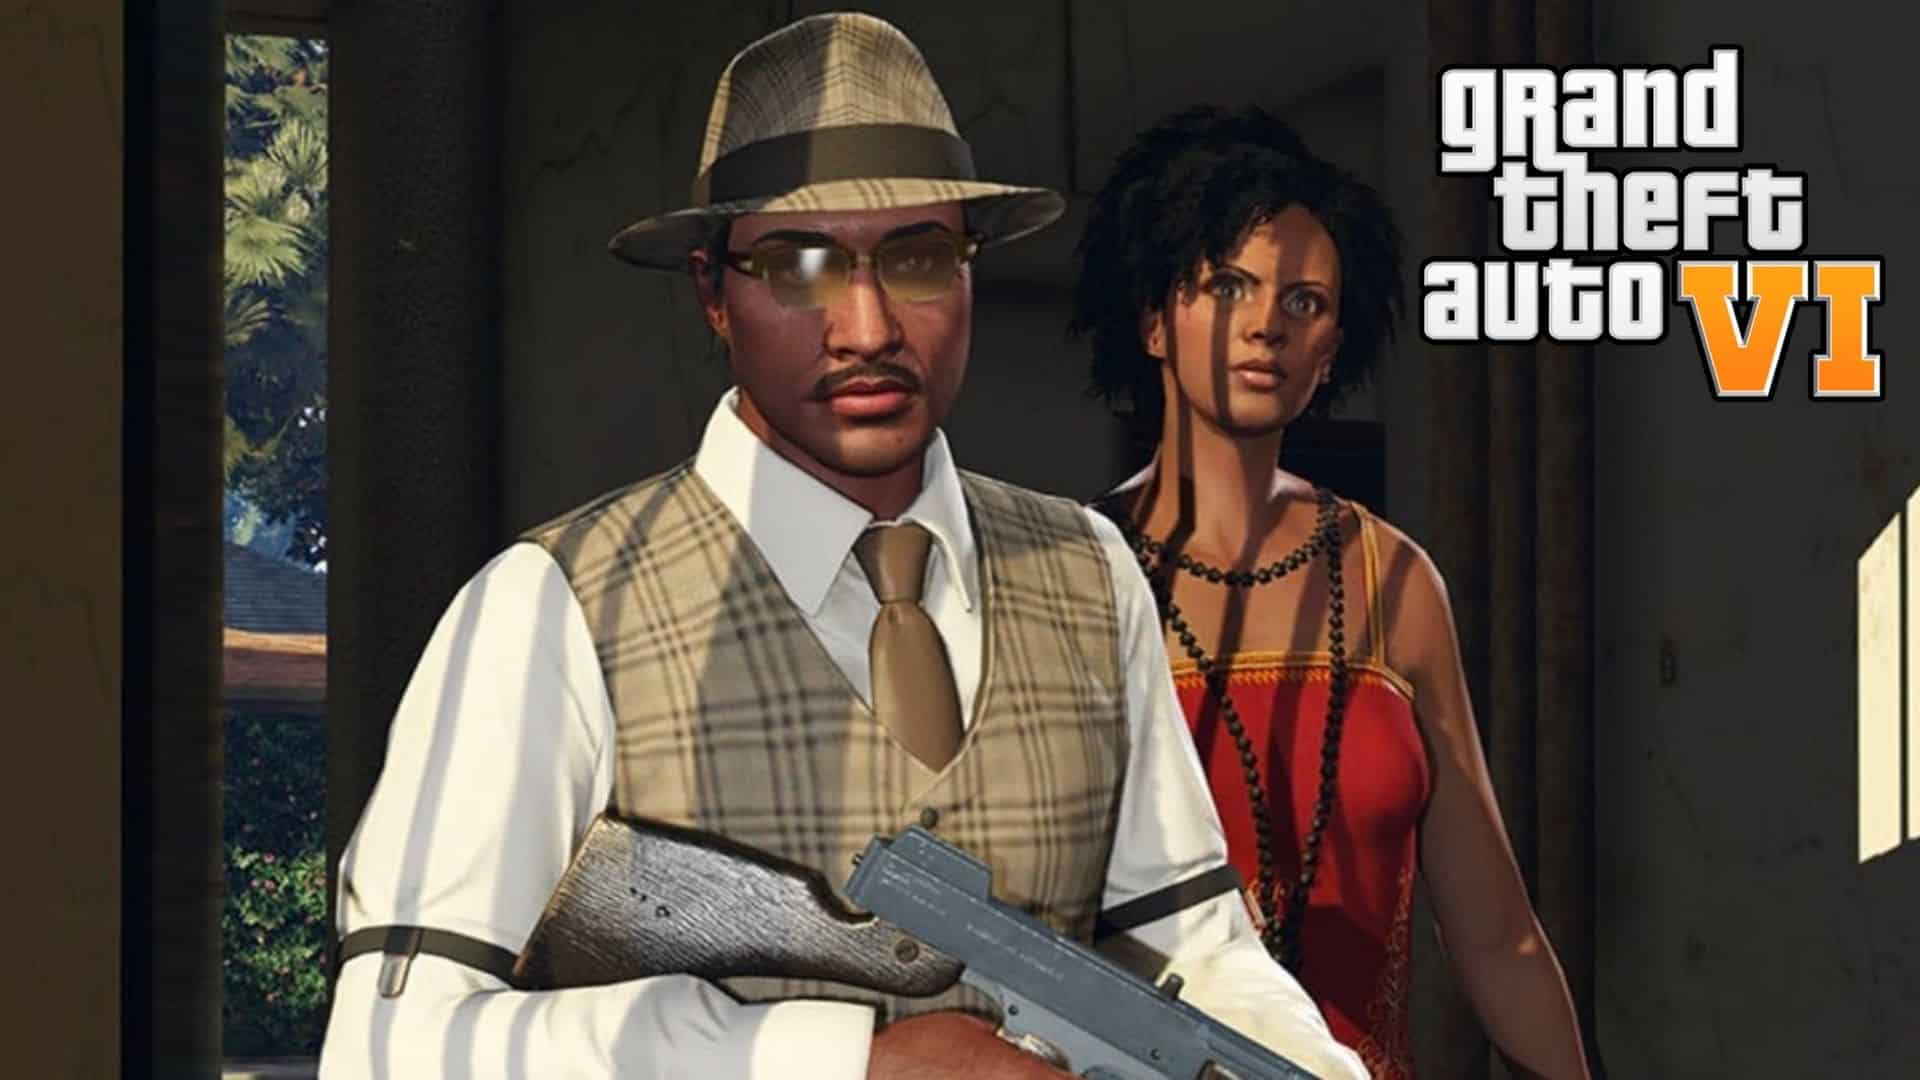 GTA Online characters dressed as gangsters